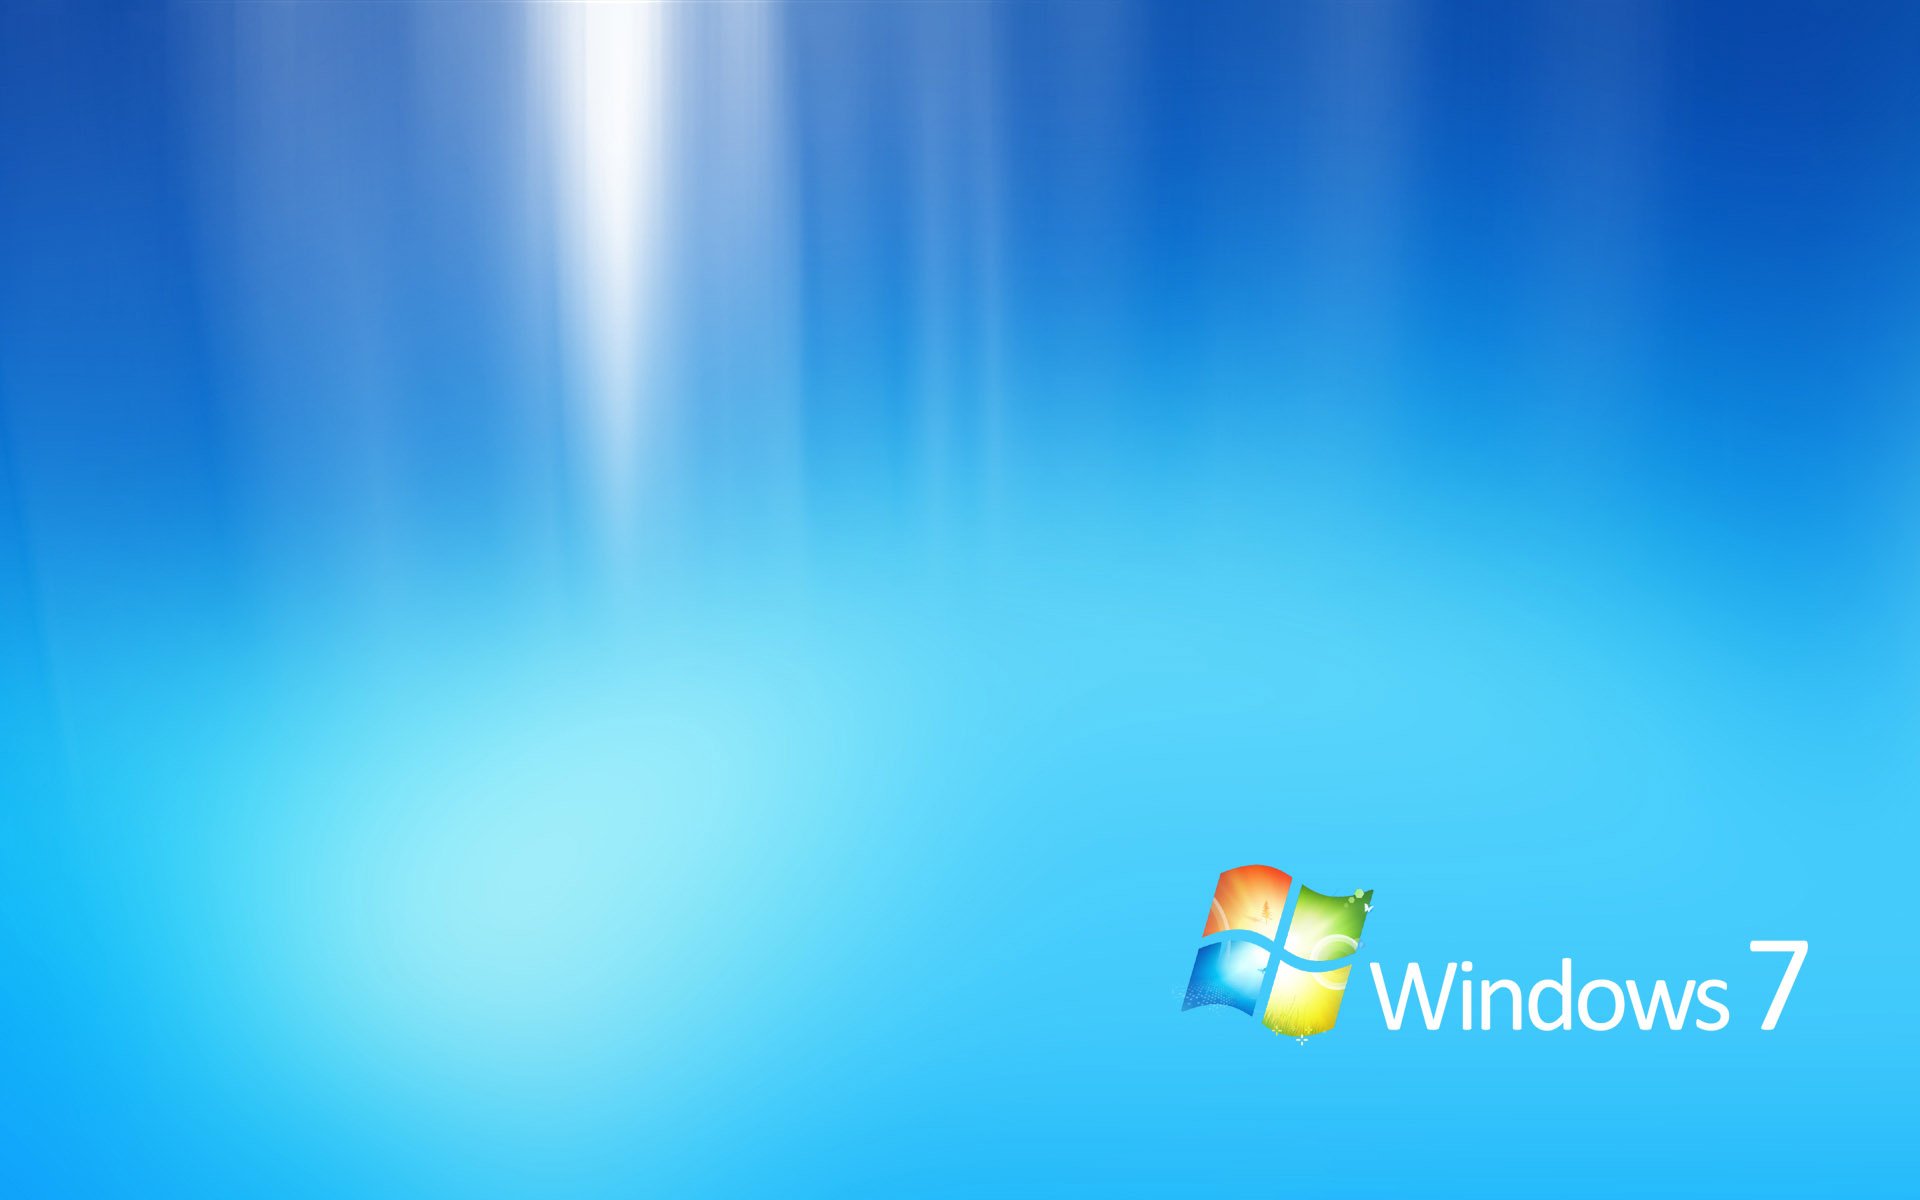 Windows 7 Hd Wallpaper Background Image 19x10